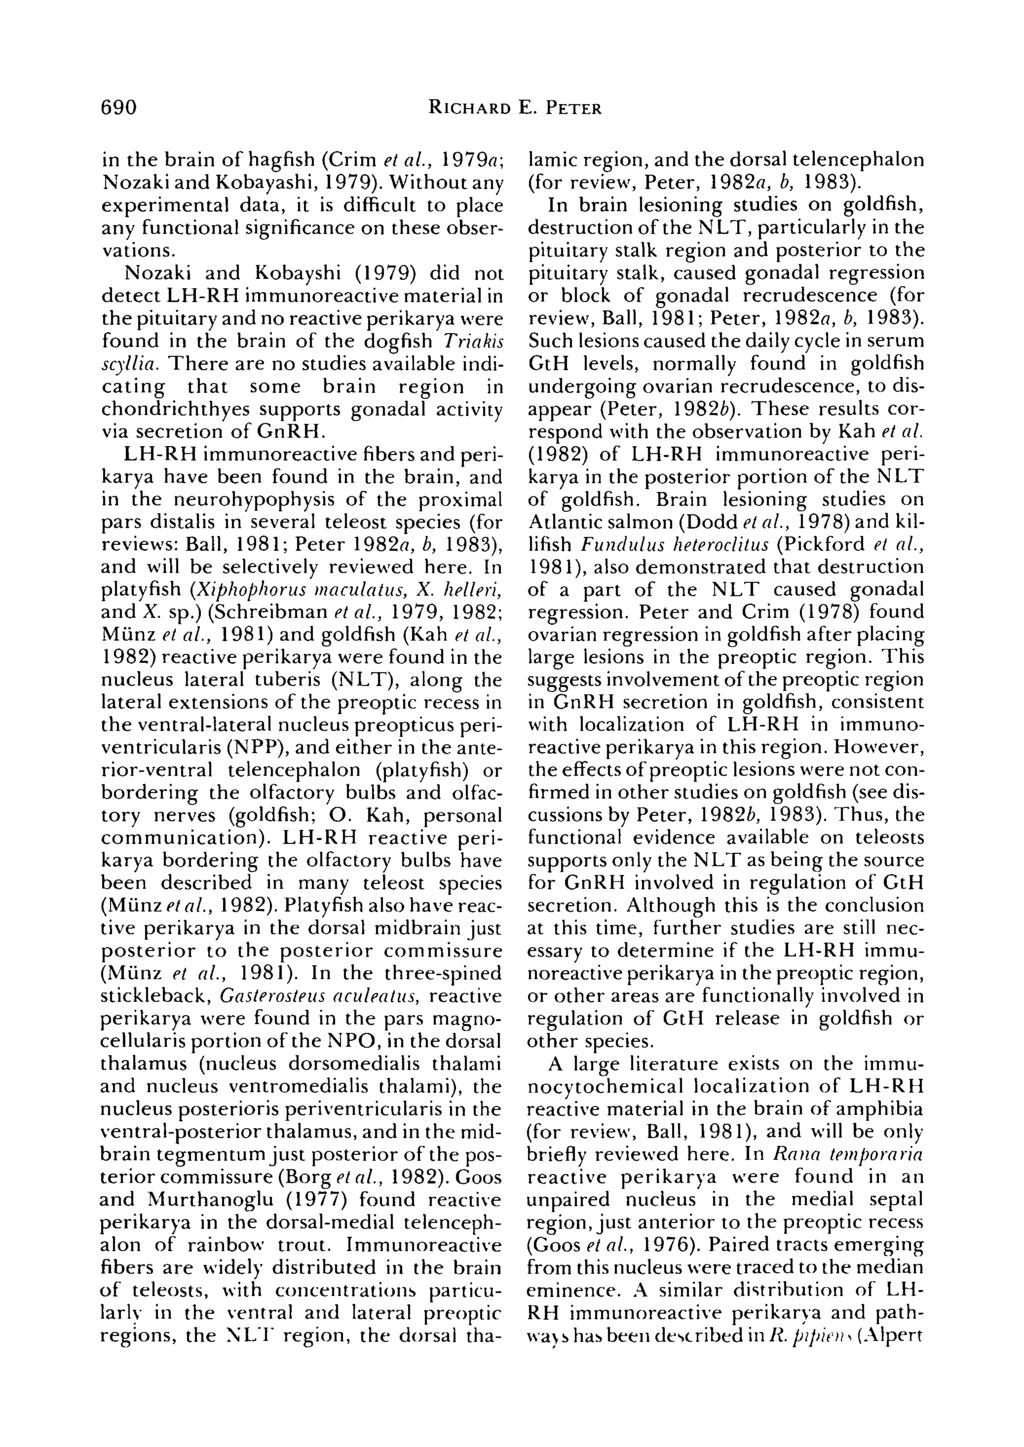 690 RICHARD E. PETER in the brain of hagfish (Crim et al., 1979a; Nozaki and Kobayashi, 1979).